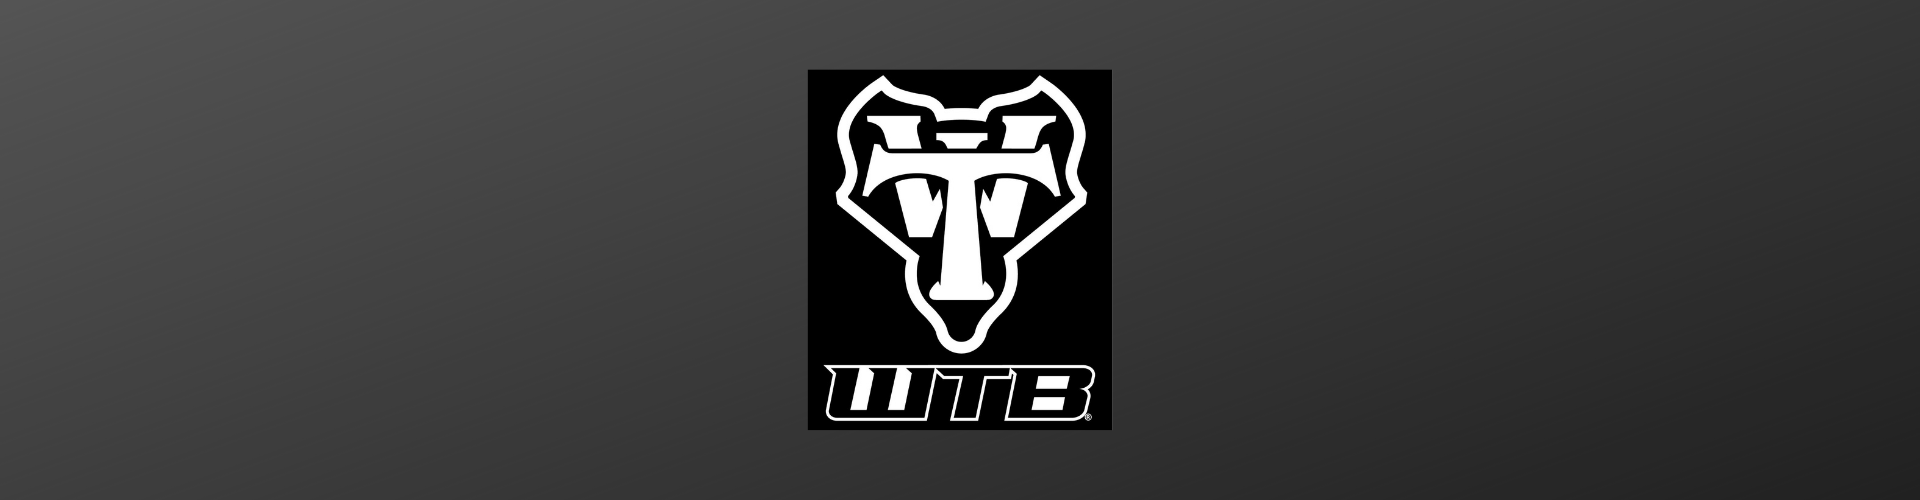 wtb banner logo